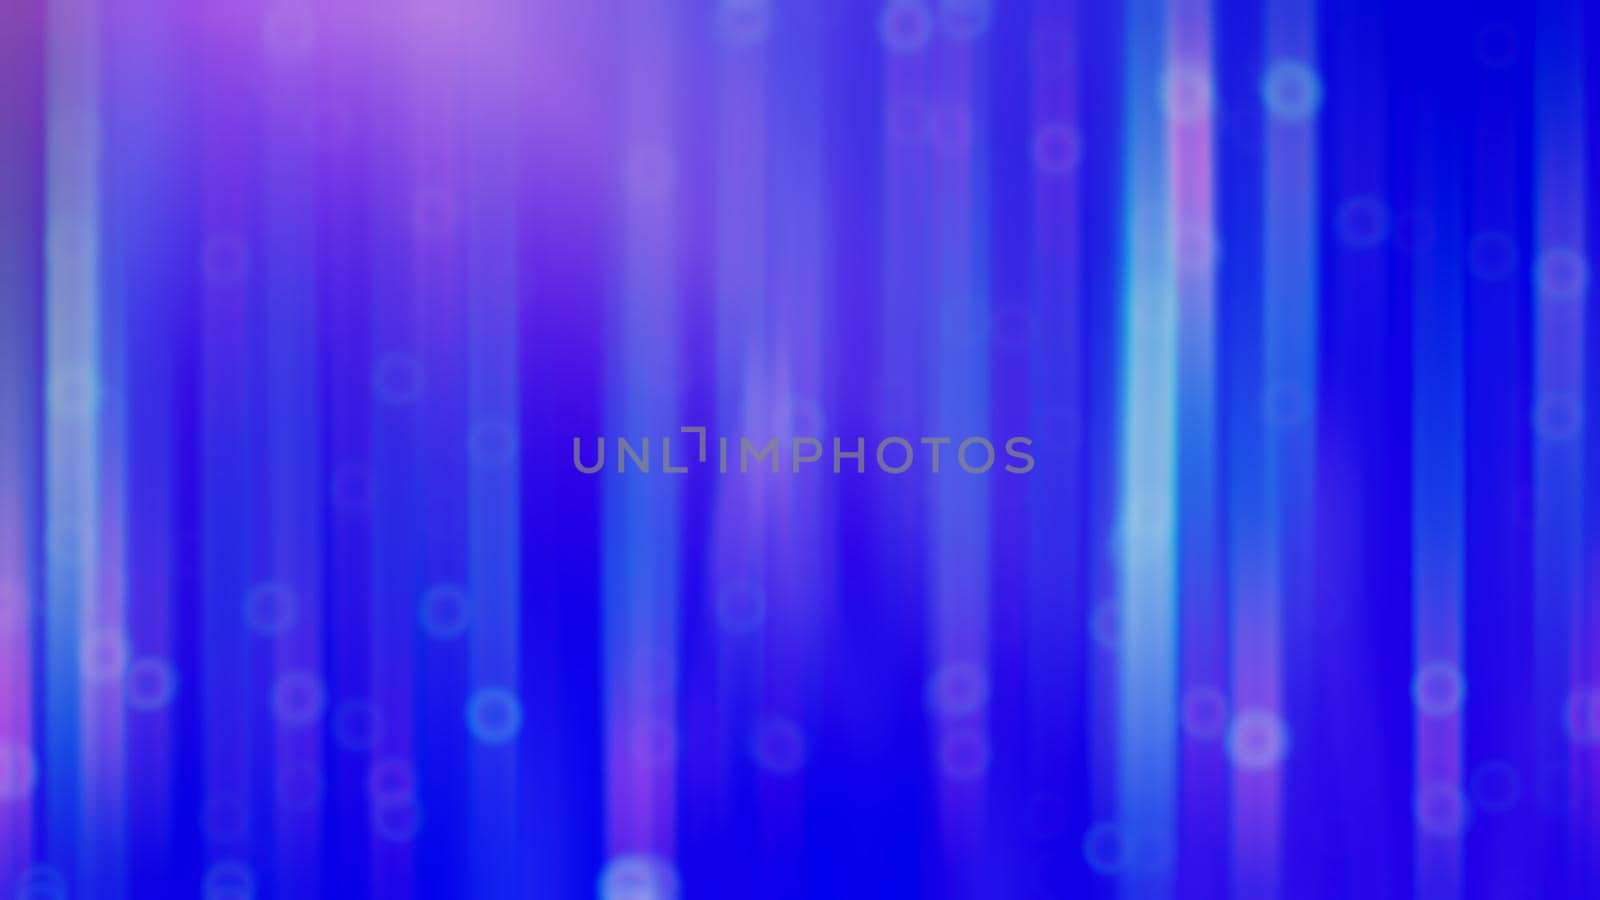 Abstract blurred gradient textured blue background. Design, art